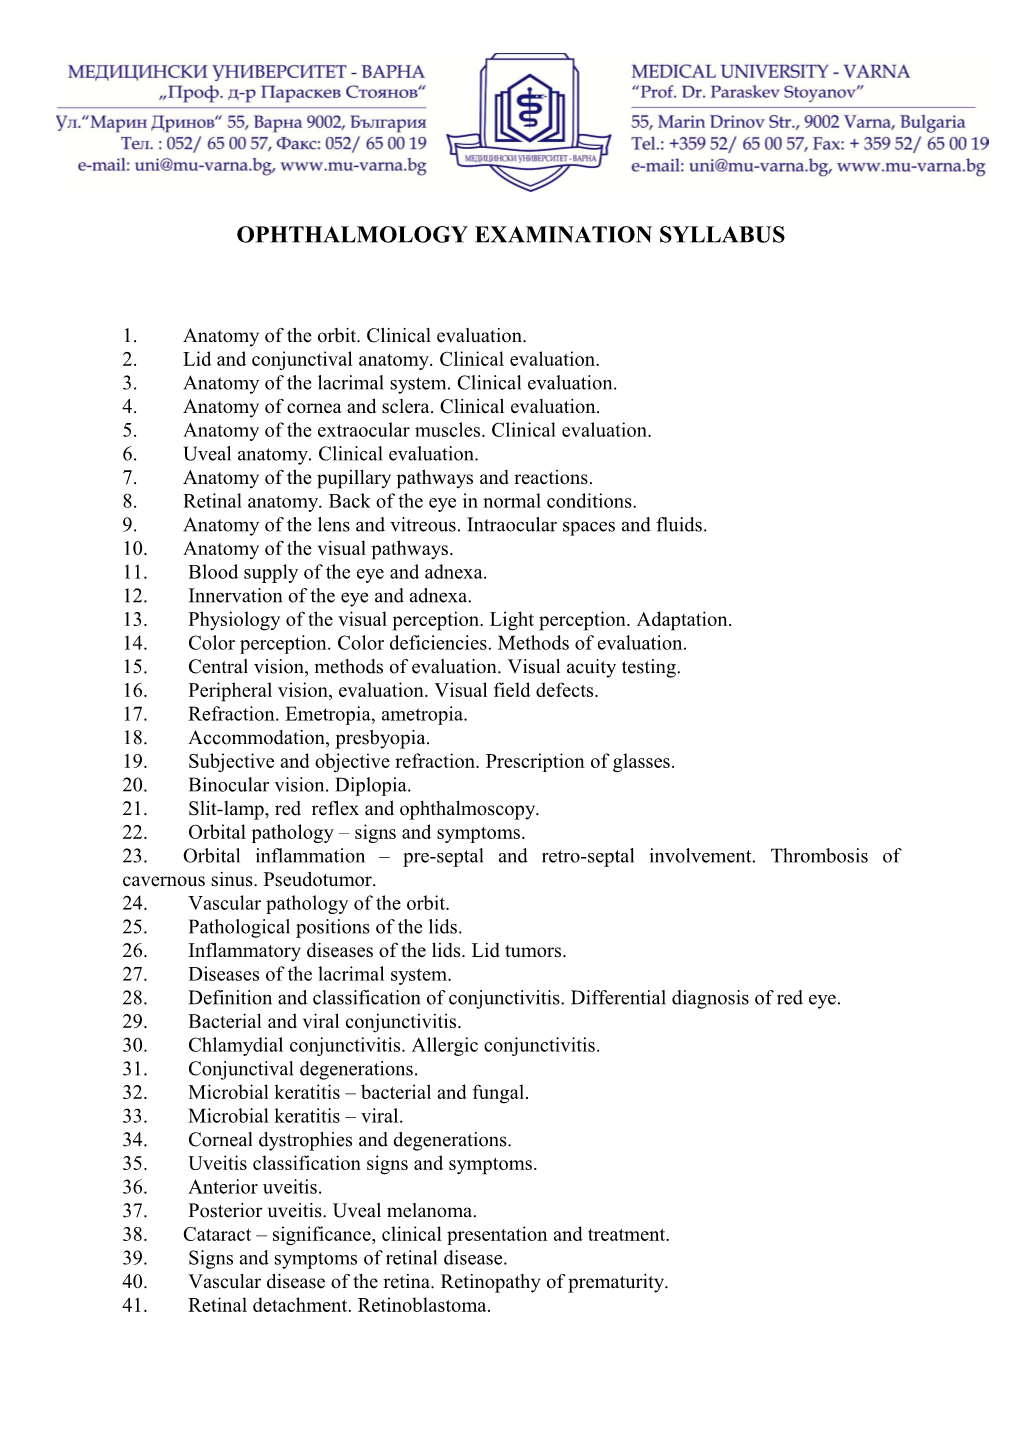 Ophthalmology Examination Syllabus